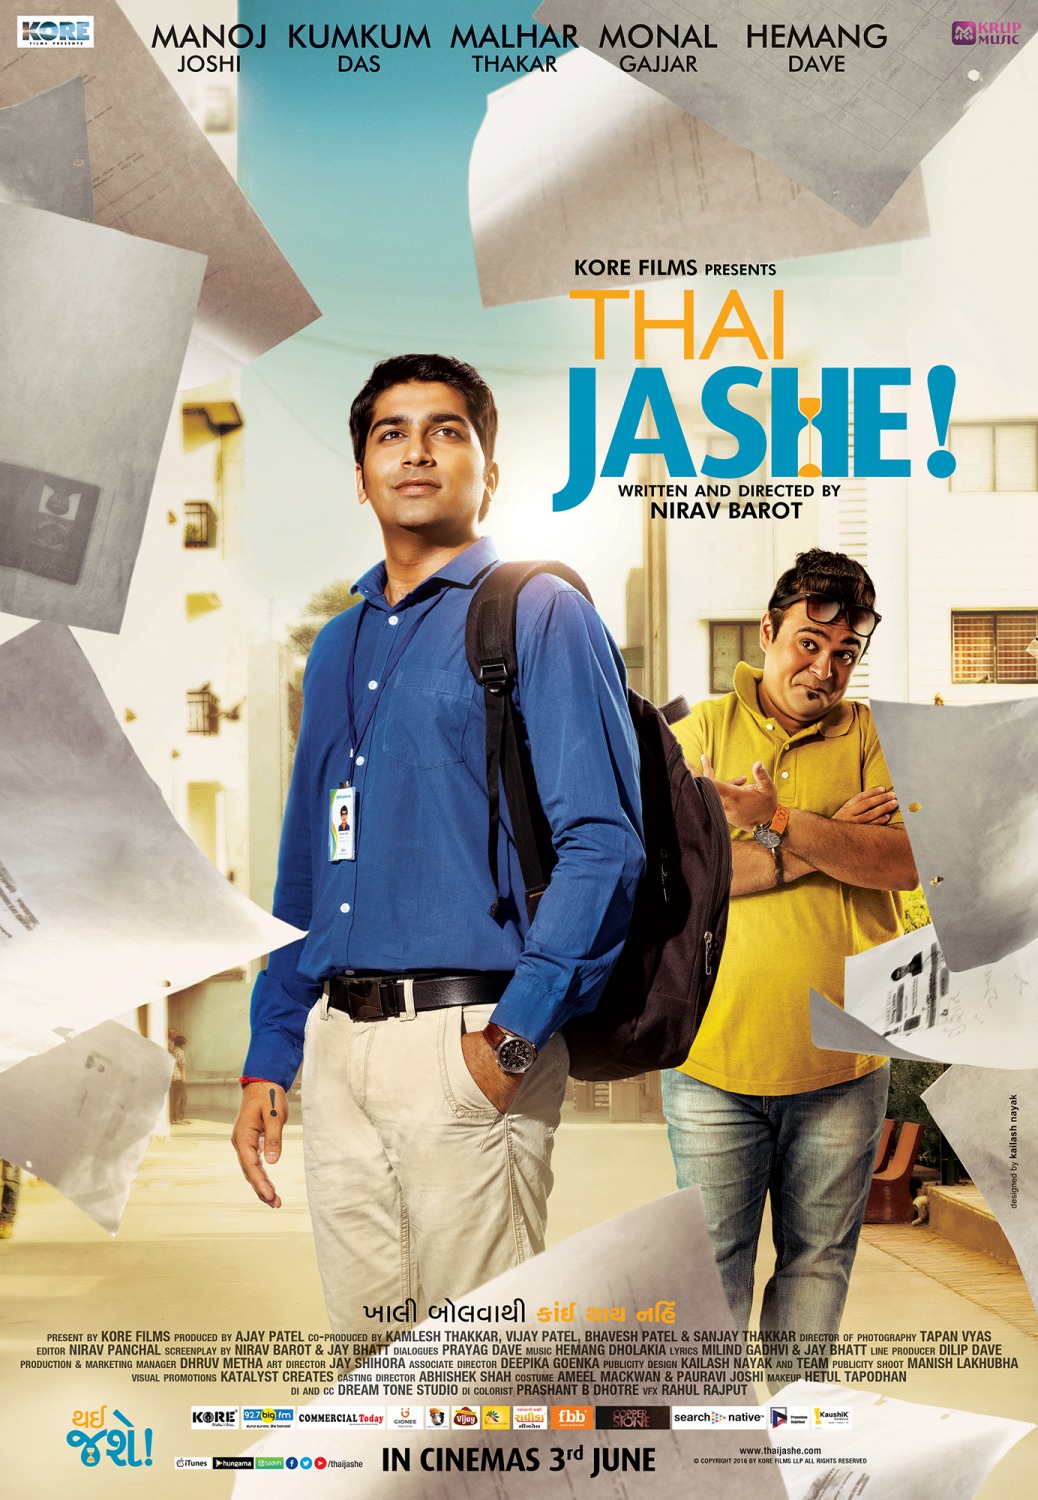 Extra Large Movie Poster Image for Thai Jashe! (#4 of 5)